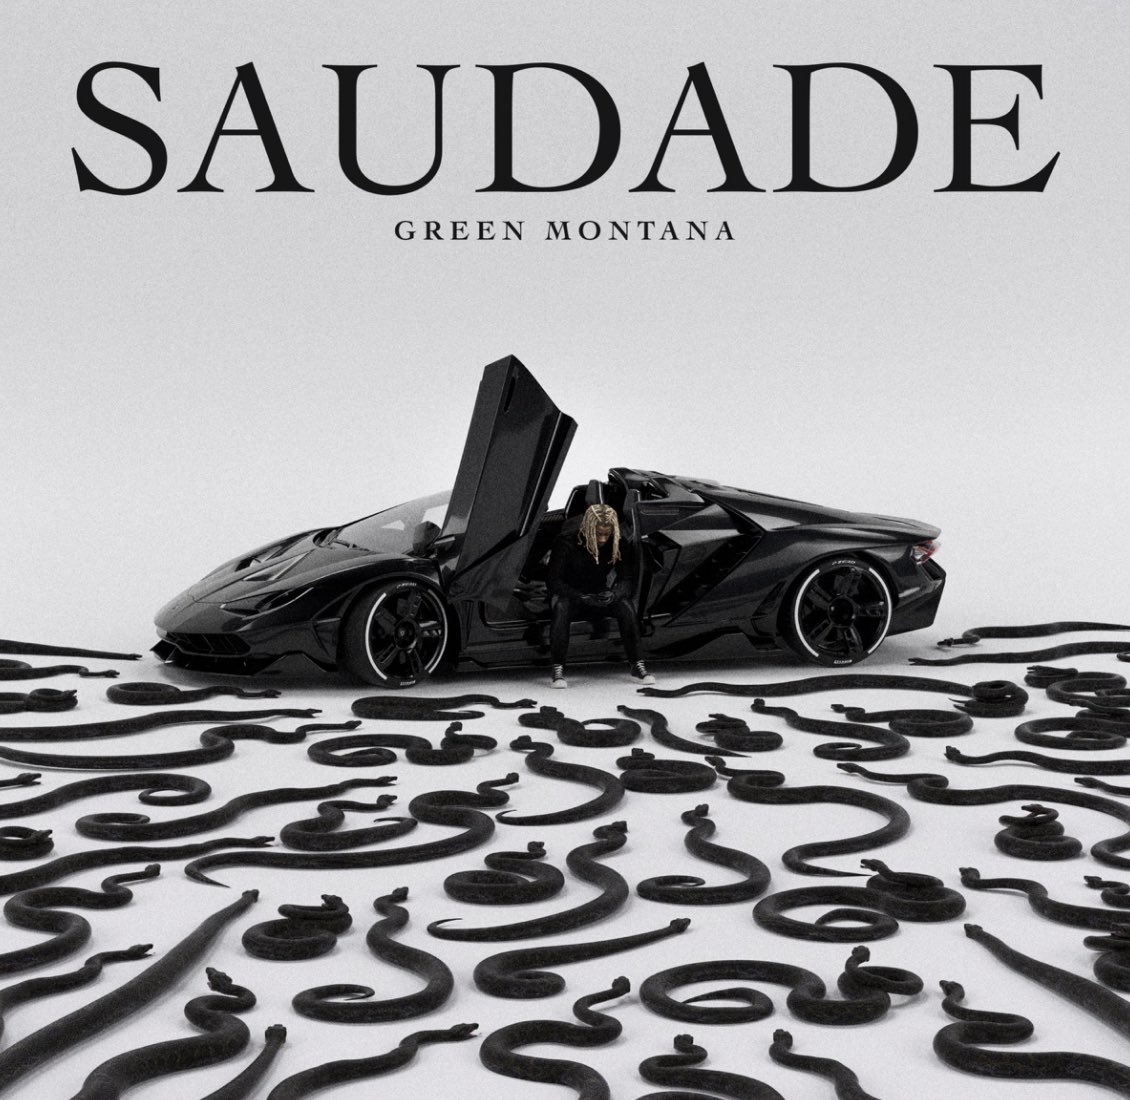 GREEN MONTANA réalise 9533 ventes avec son album “SAUDADE” !